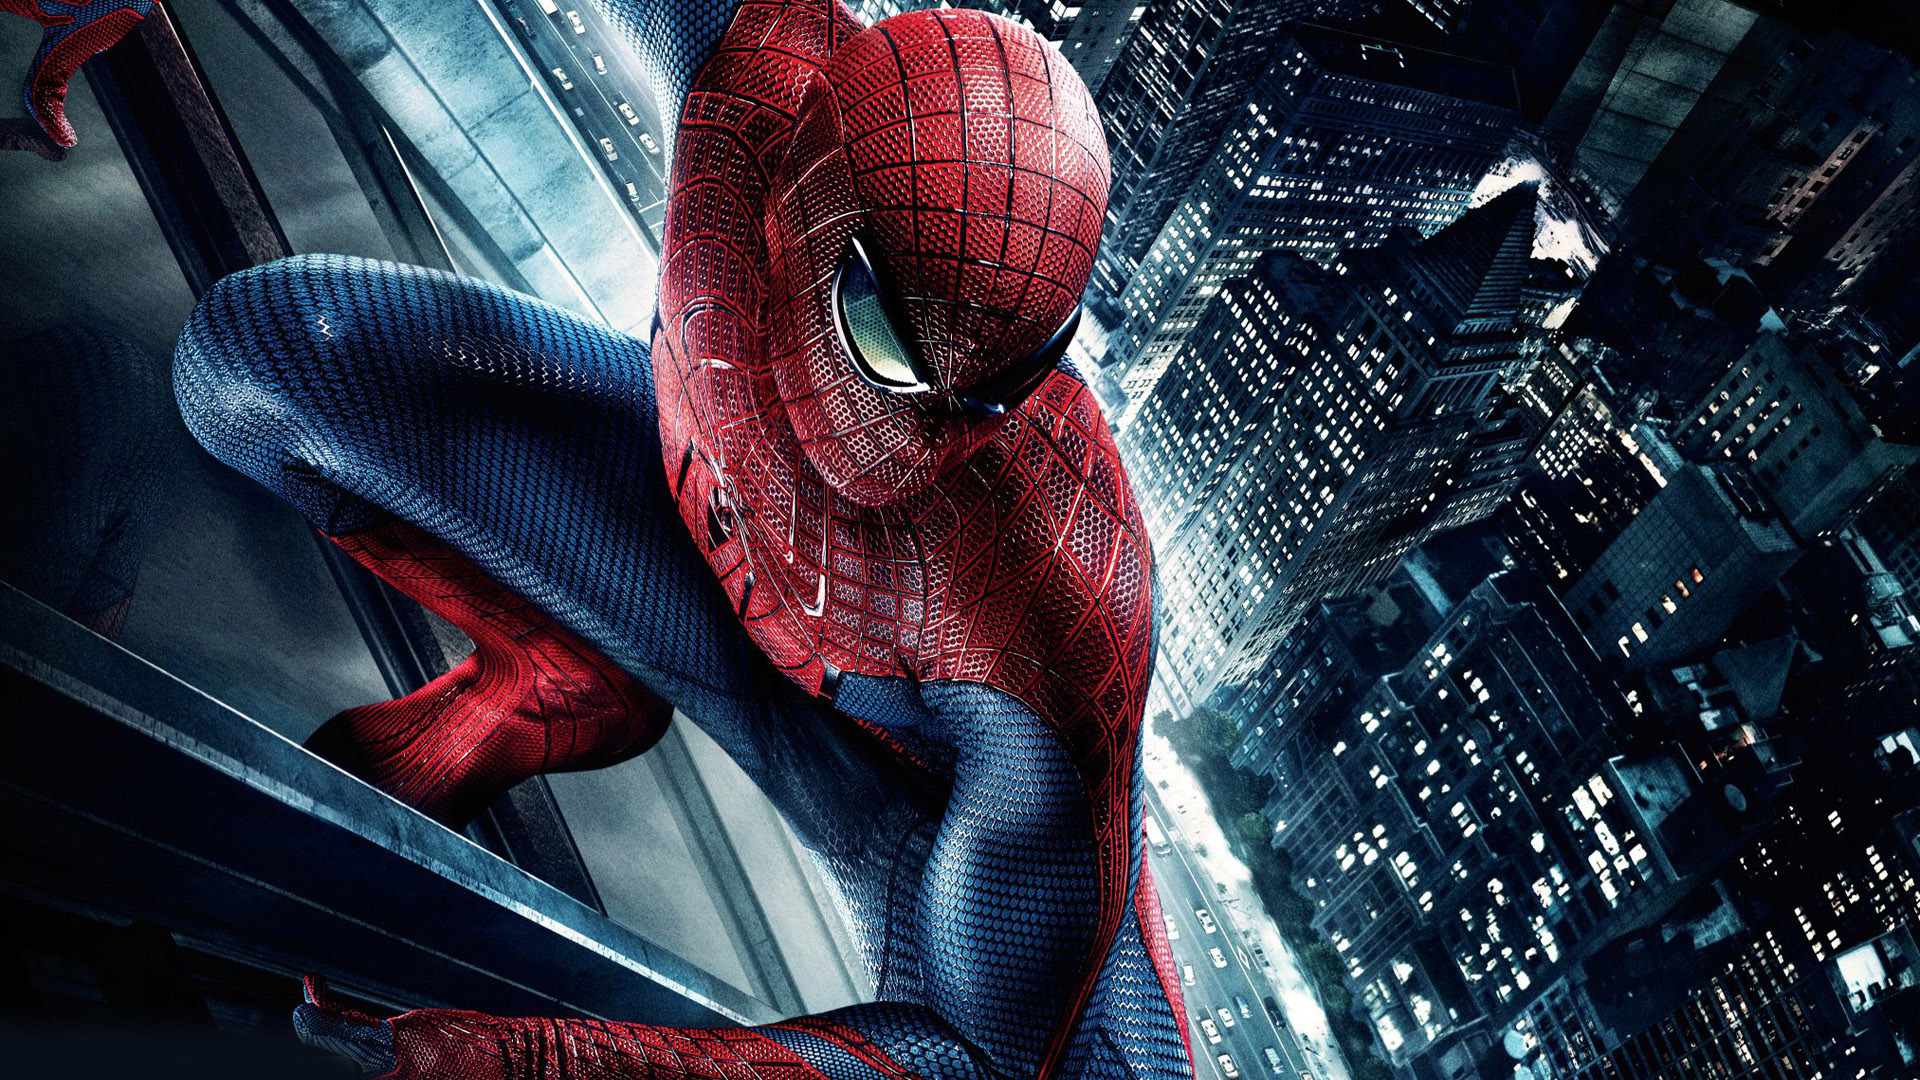 49+] Amazing Spider-Man Wallpaper - WallpaperSafari